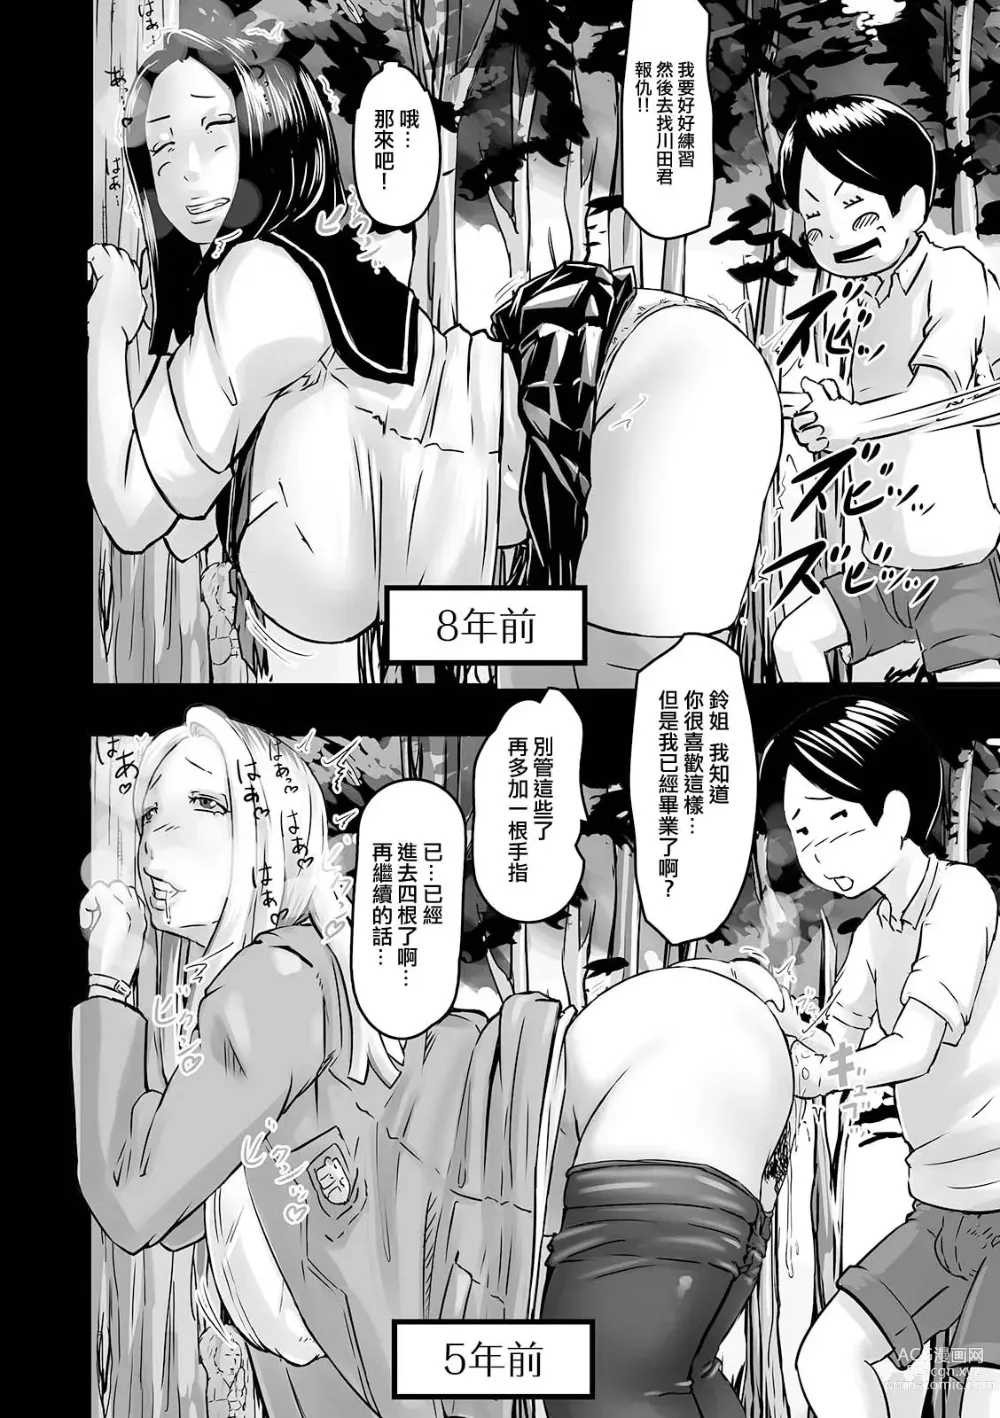 Page 6 of manga 昔散々弄られたお姉ちゃんが人妻になって帰って来た件